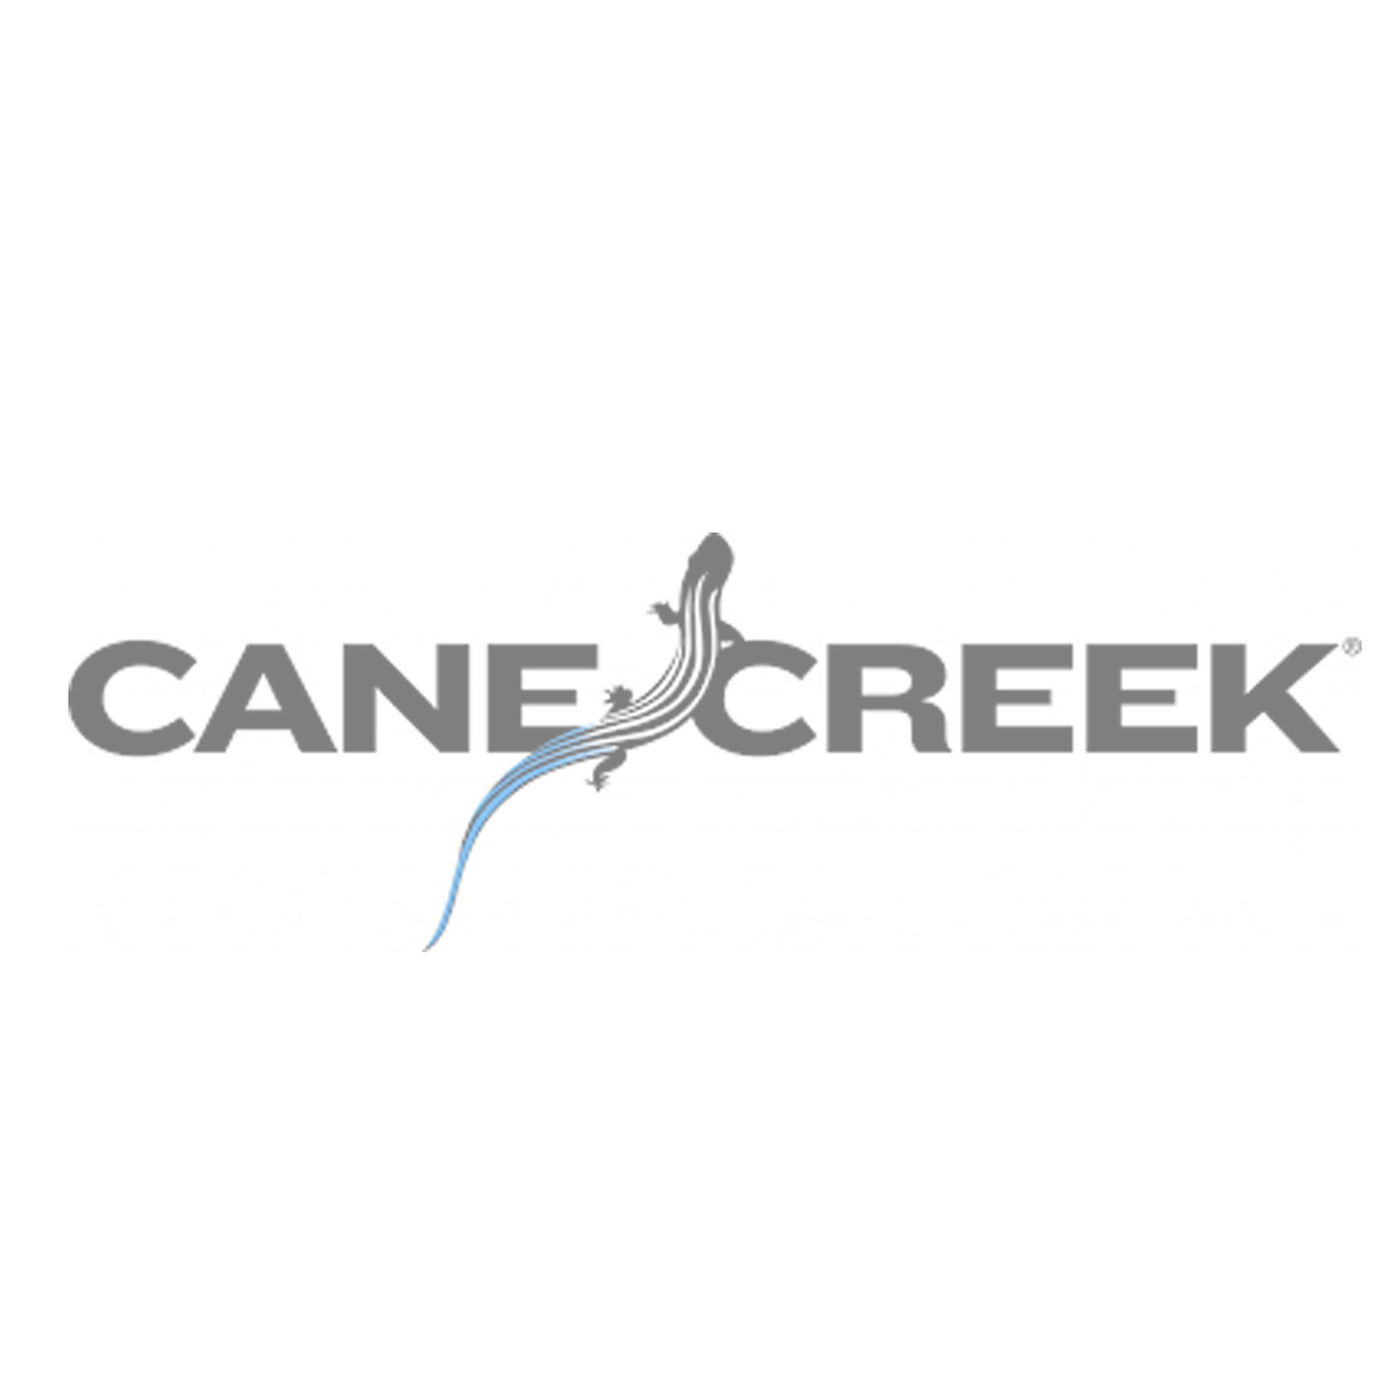 Cane Creek Helm 50Hrs Service Kit